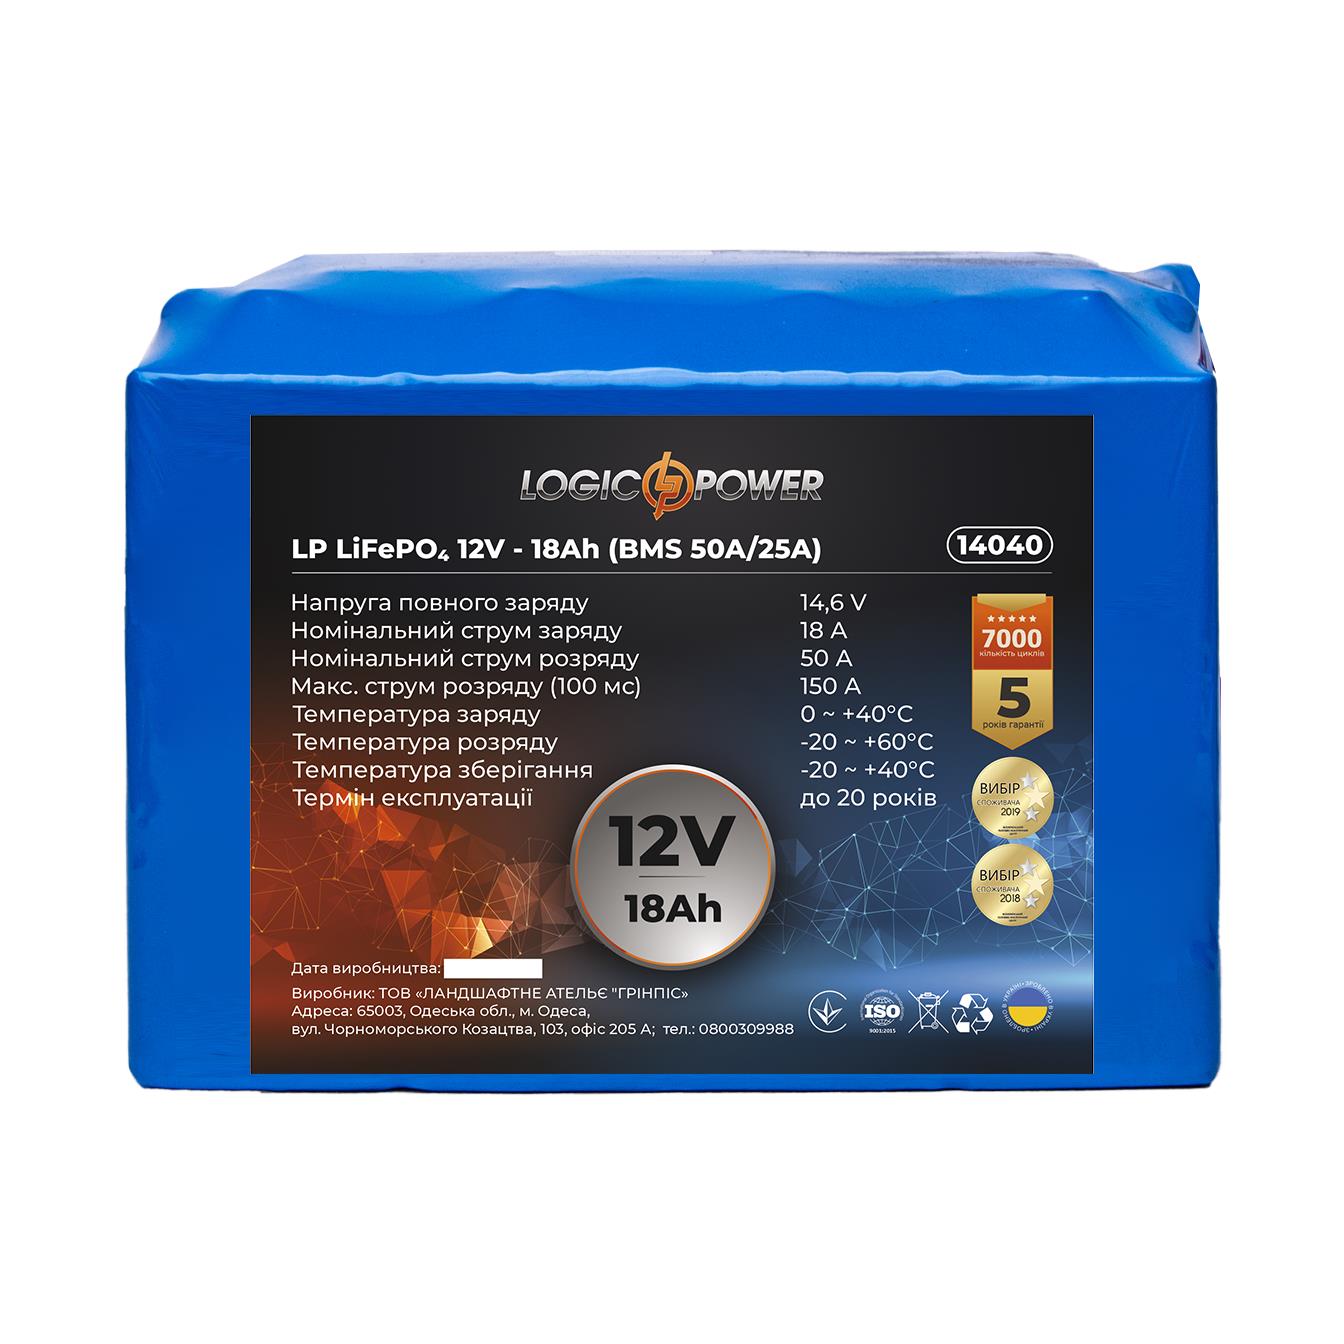 Аккумулятор литий-железо-фосфатный LogicPower LP LiFePO4 12V - 18 Ah (BMS 50A/25A) (14040)